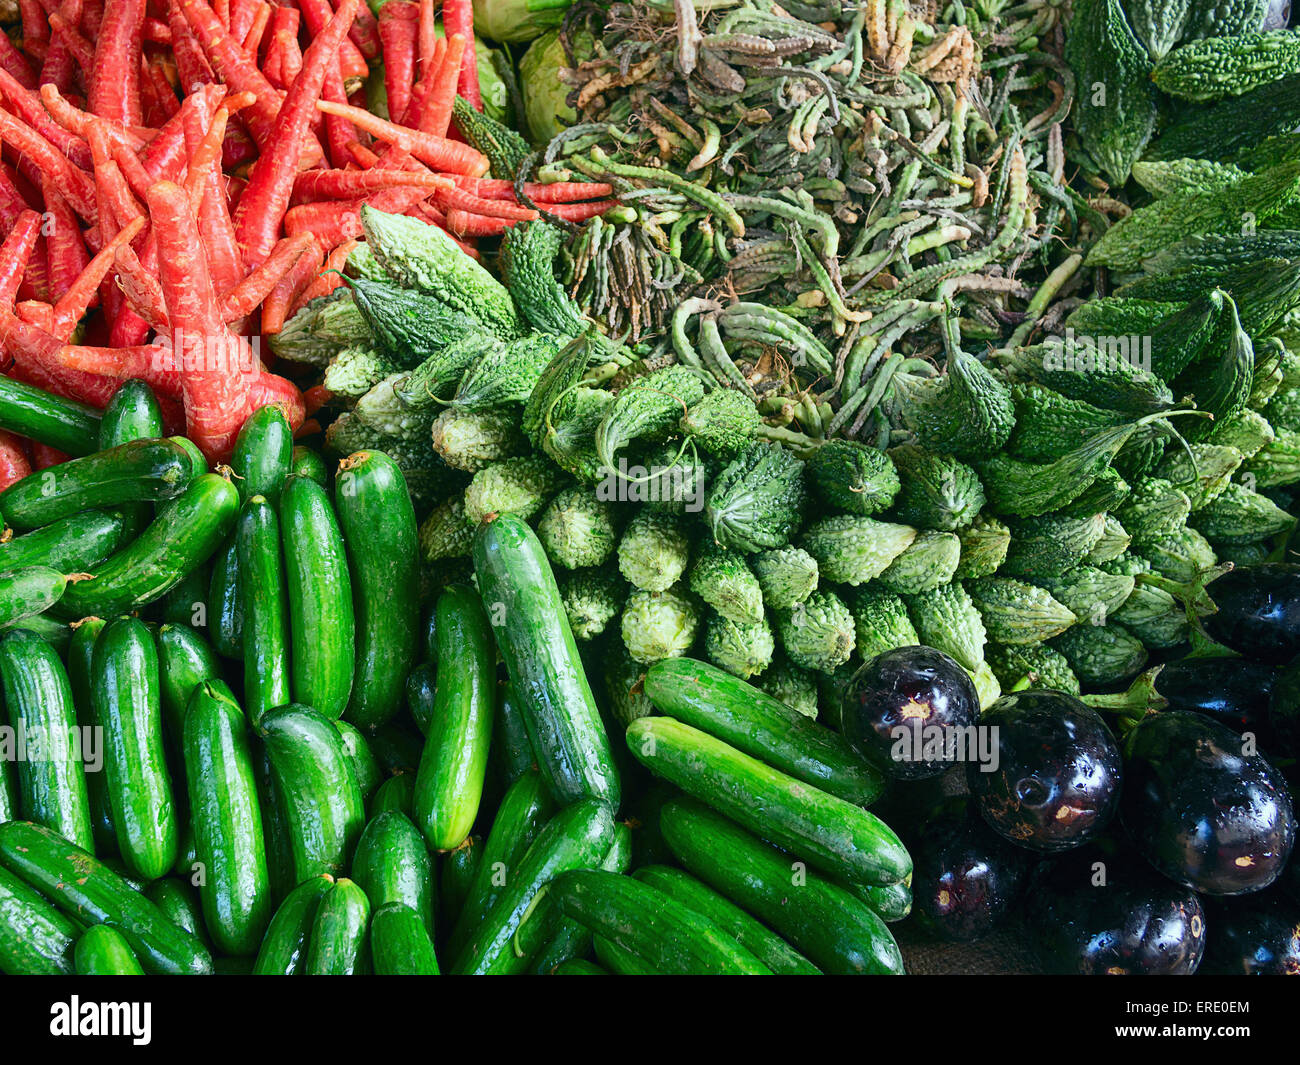 Fresh vegetables for sale in market Stock Photo